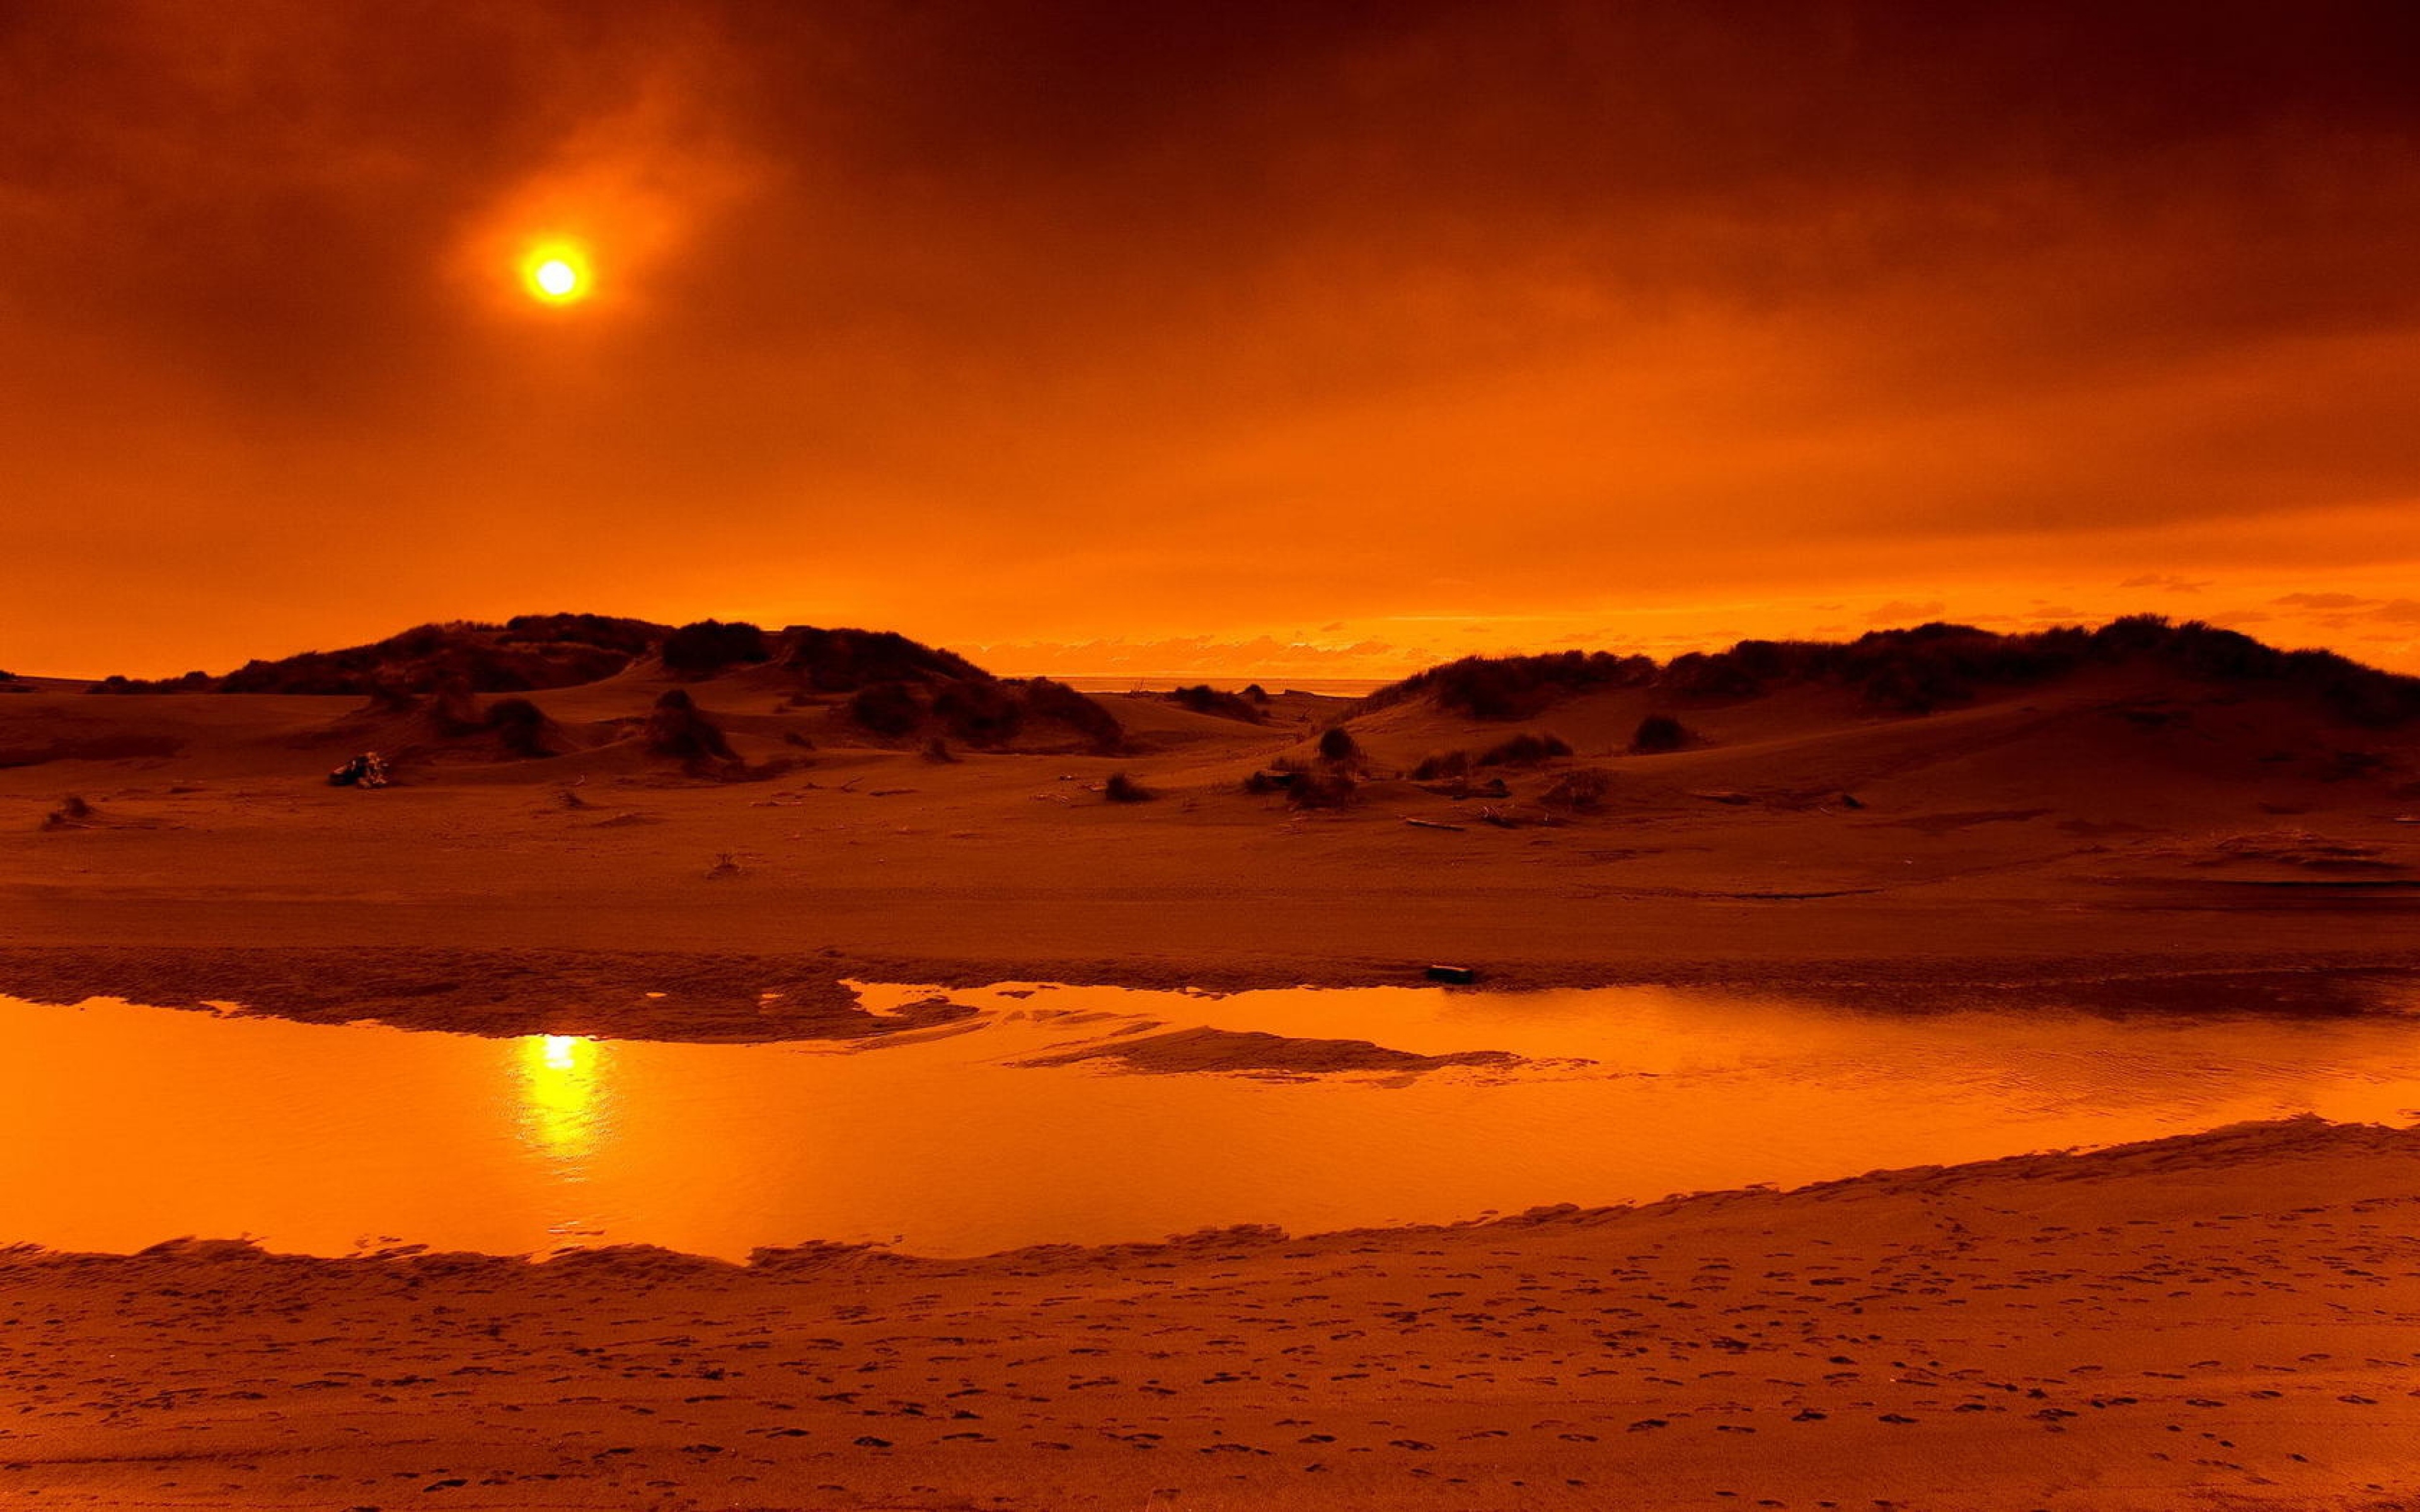 Download Wallpaper 3840x2400 desert oasis heat hot orange sun